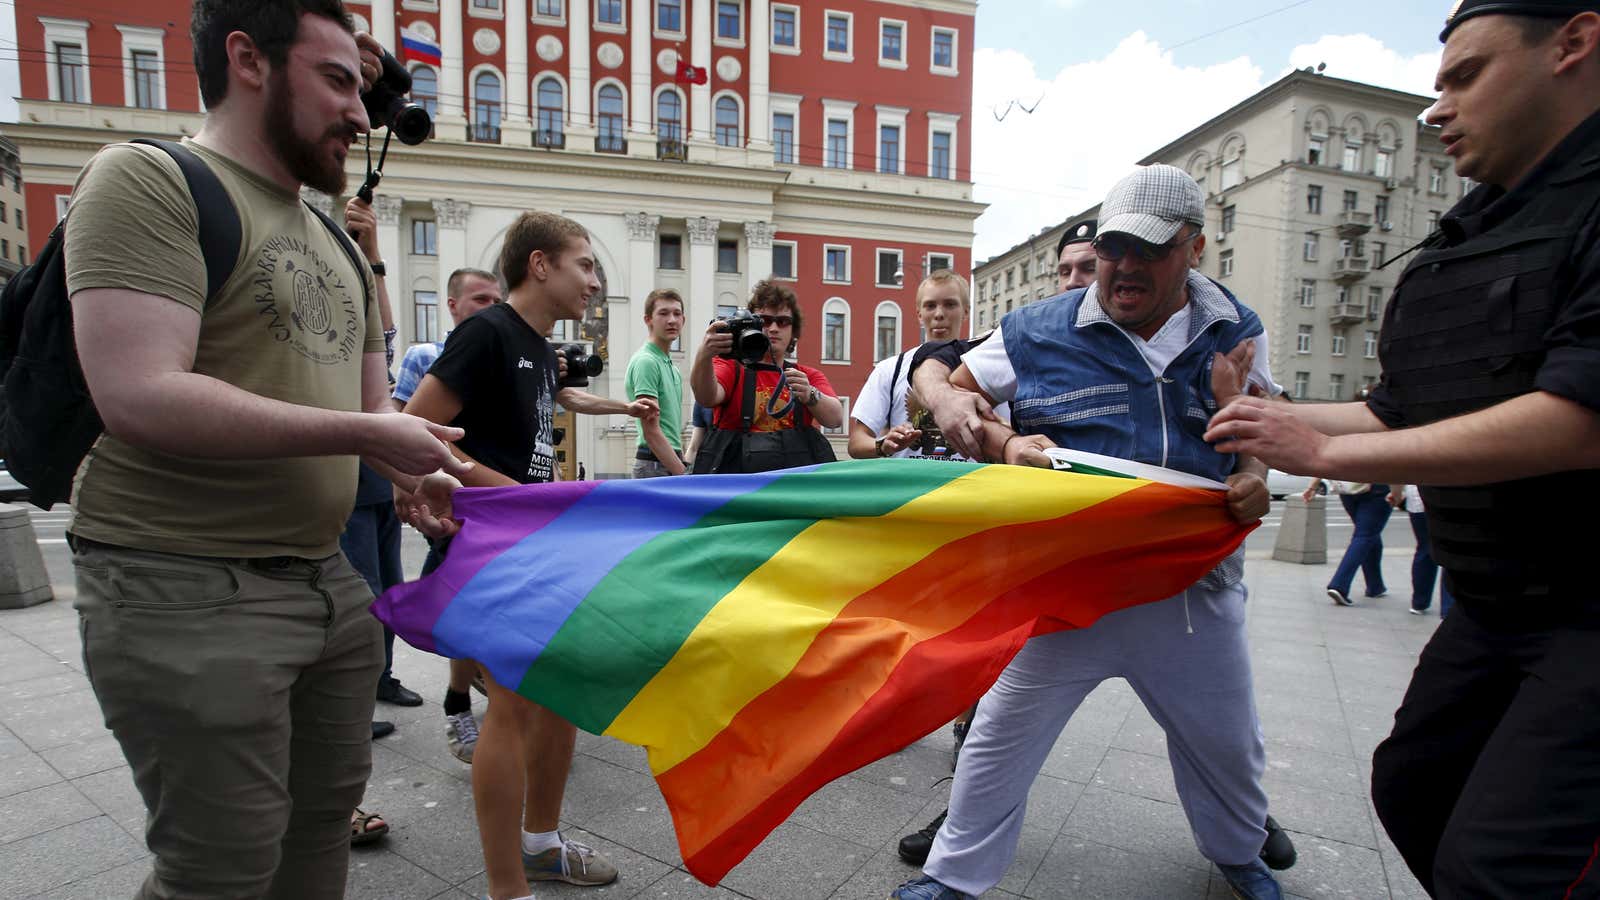 Russia has a homophobia problem.